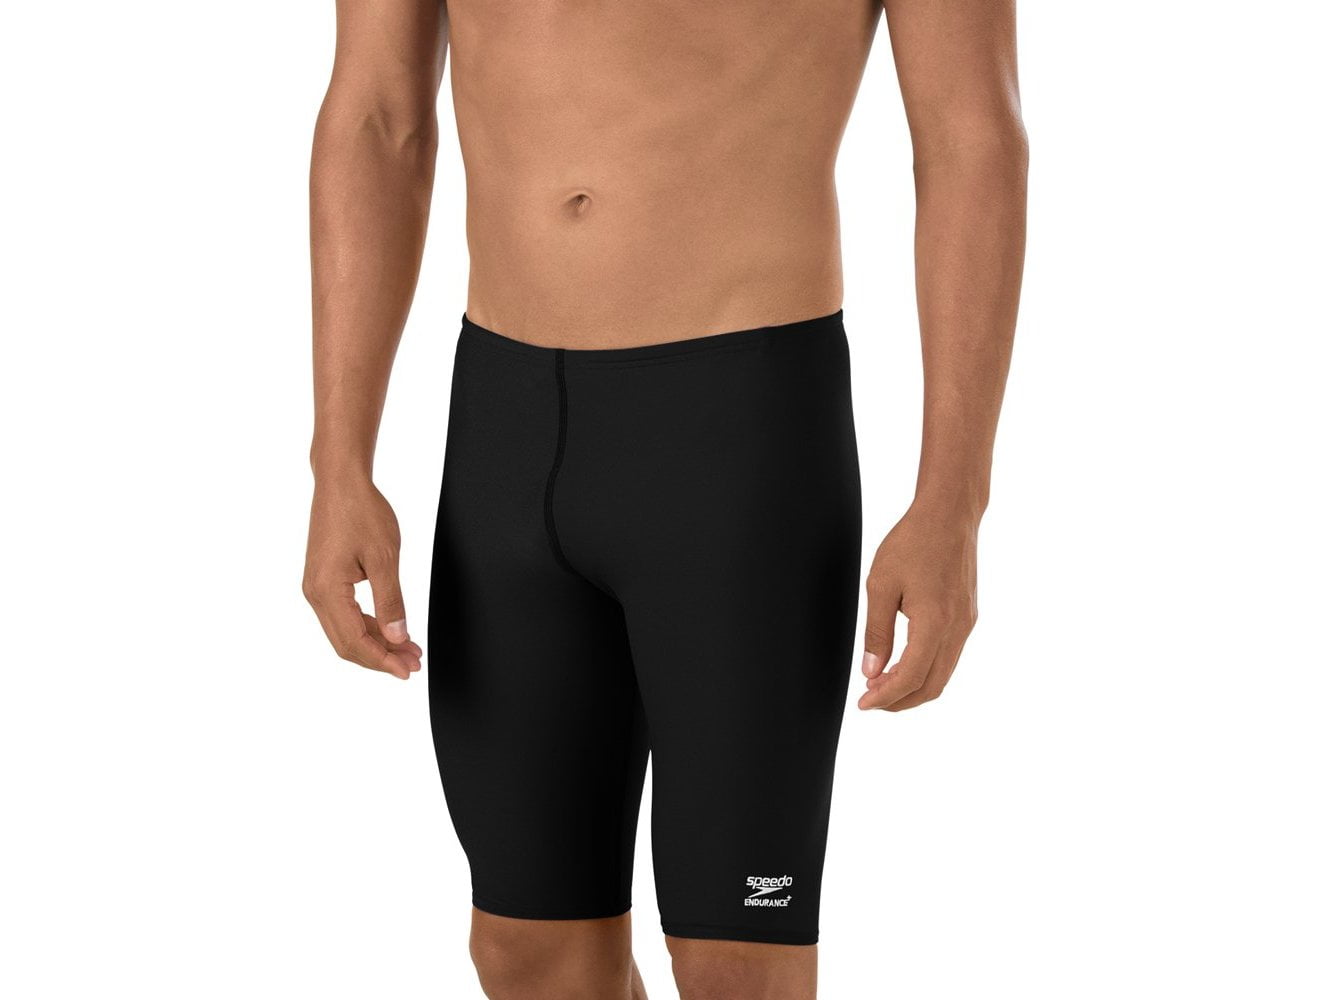 Adult Mens Swimming Jammer Shorts Swim Trunks Size 26-40 New Speedo Endurance 